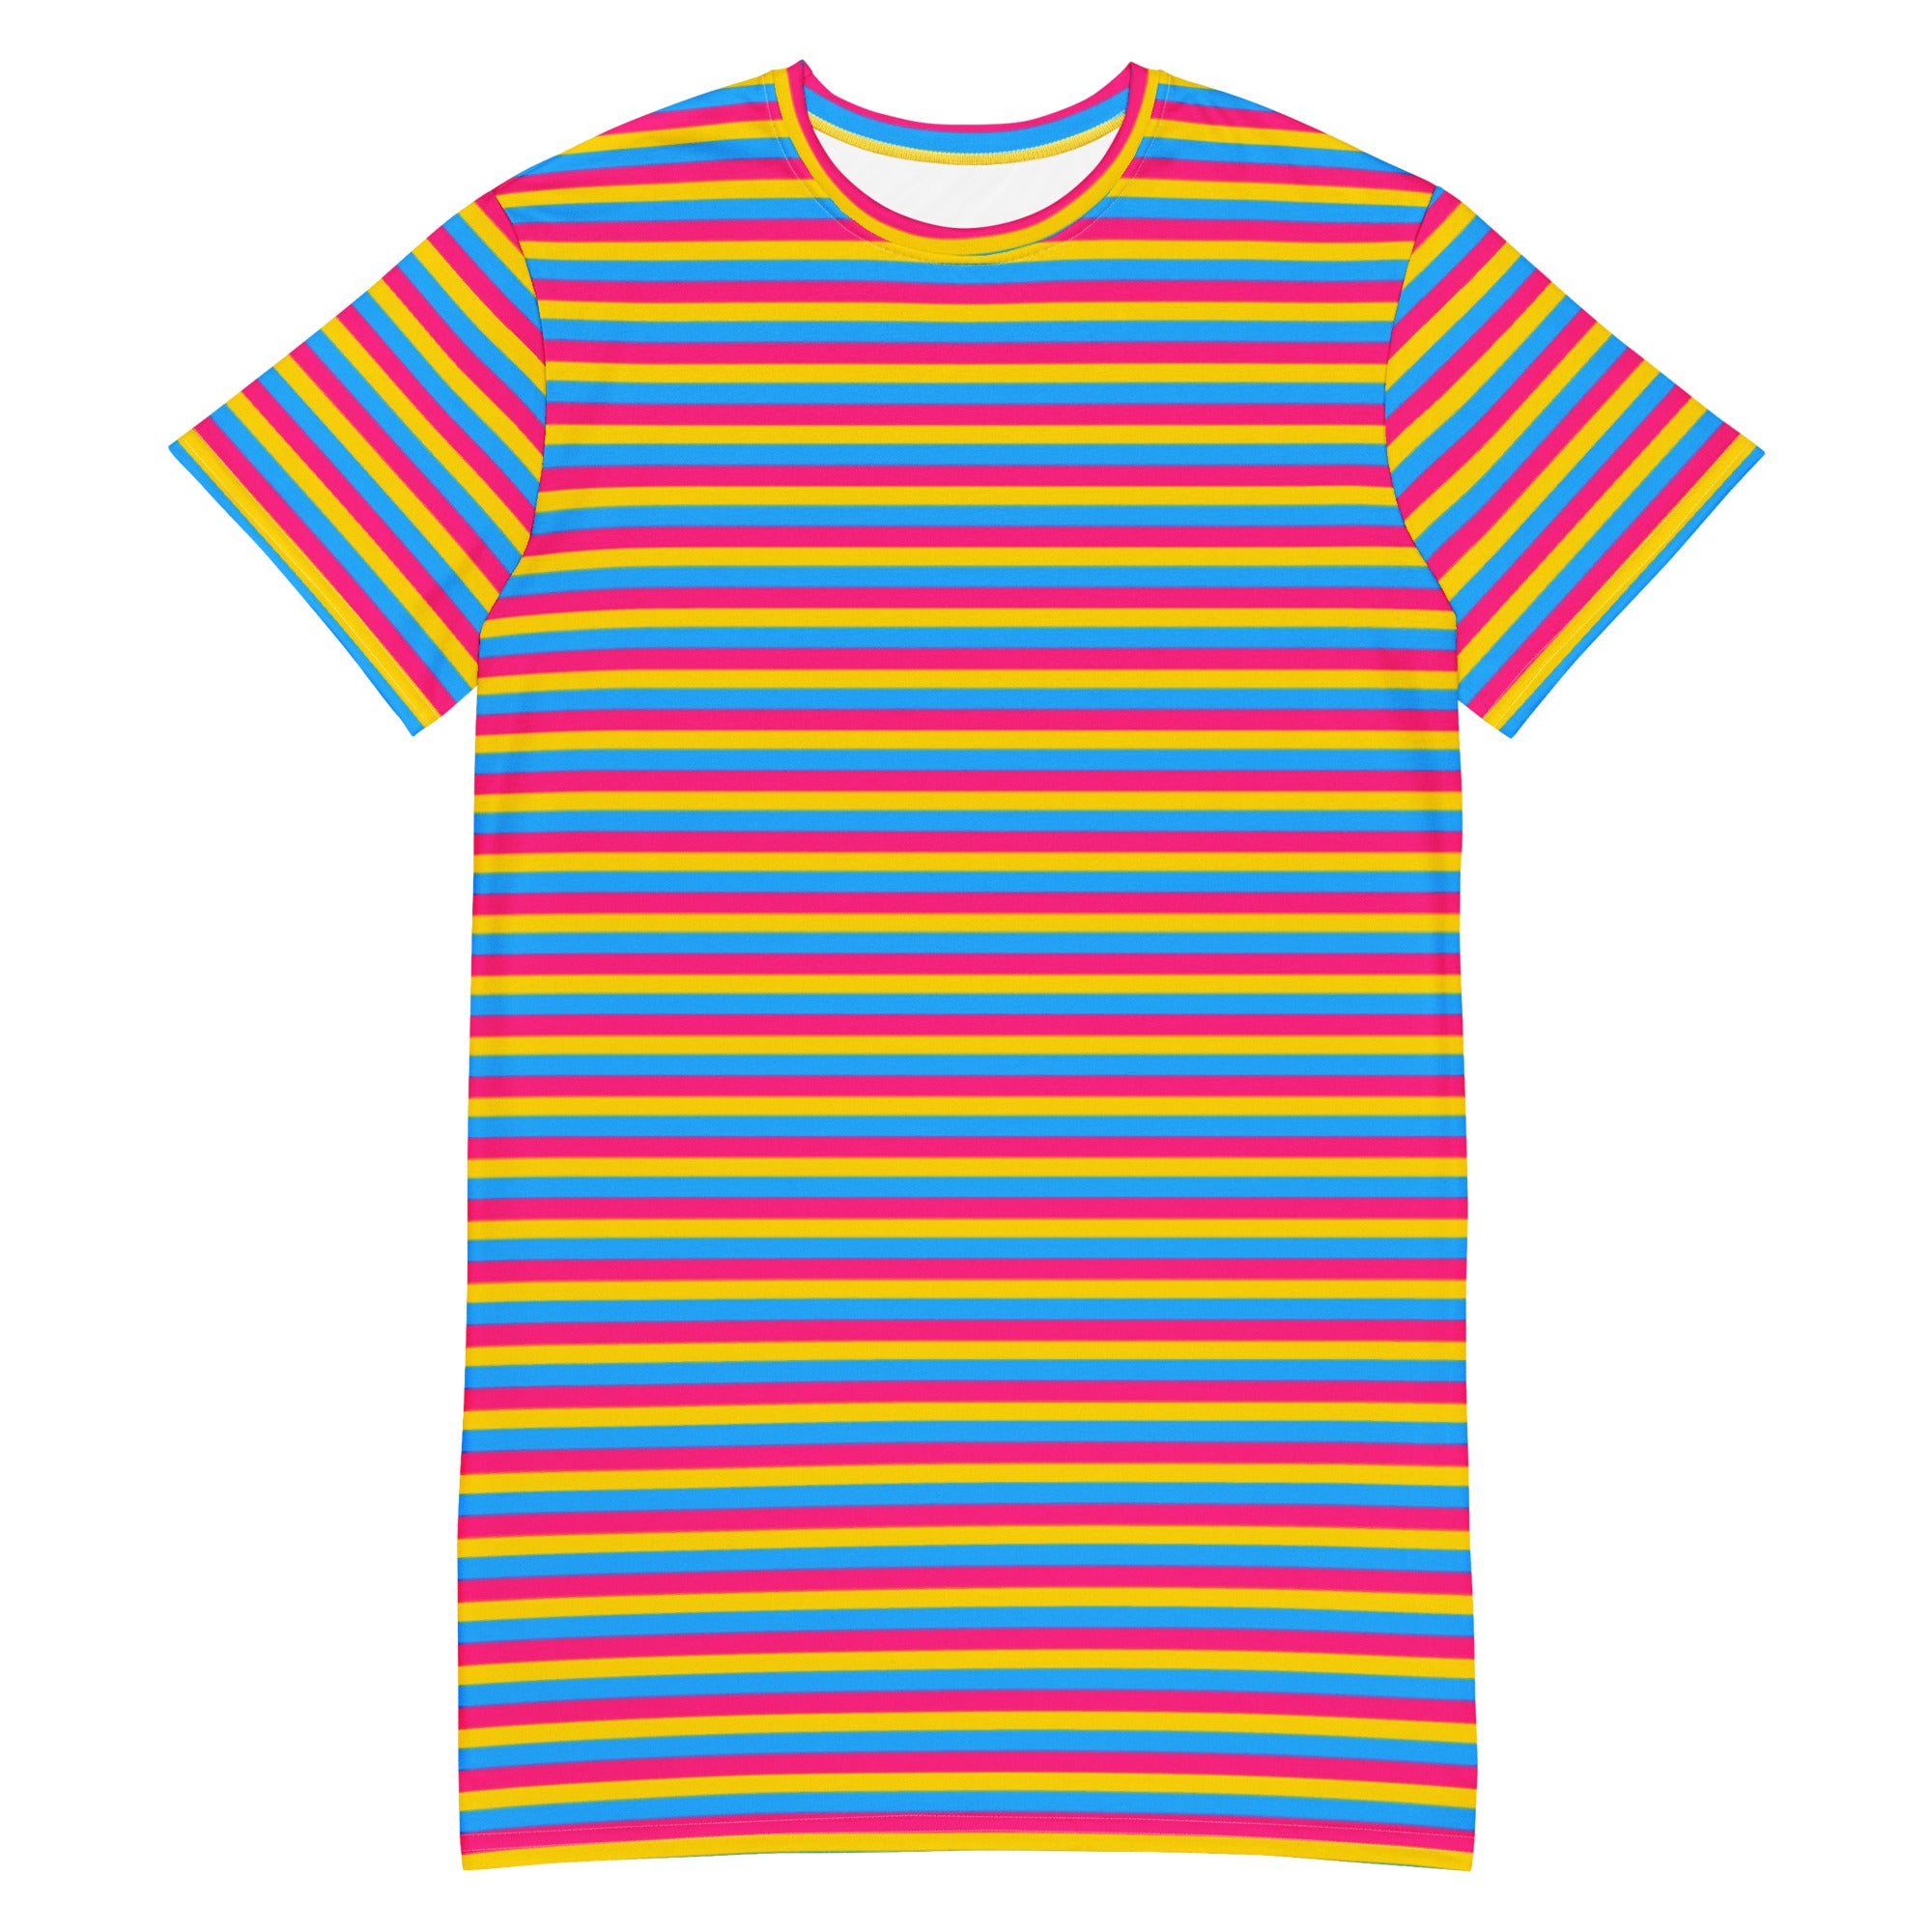 Pansexual Flag T-Shirt Dress